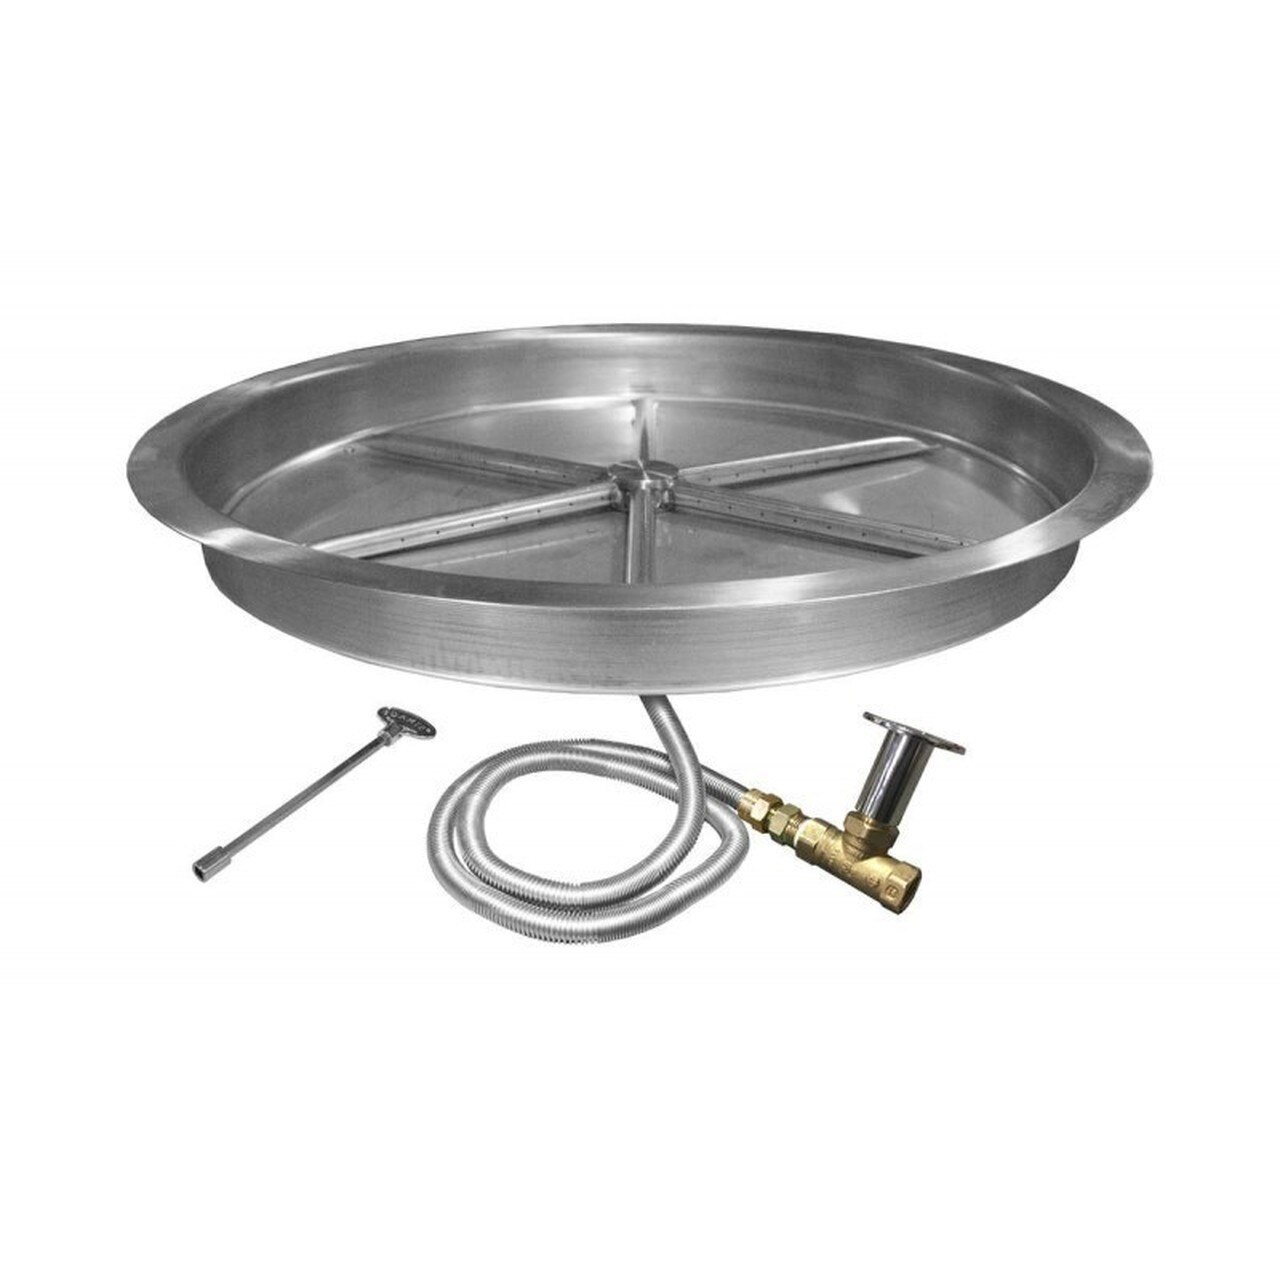 firegear match light gas fire pit burner kit round bowl pan 29 inch c=2